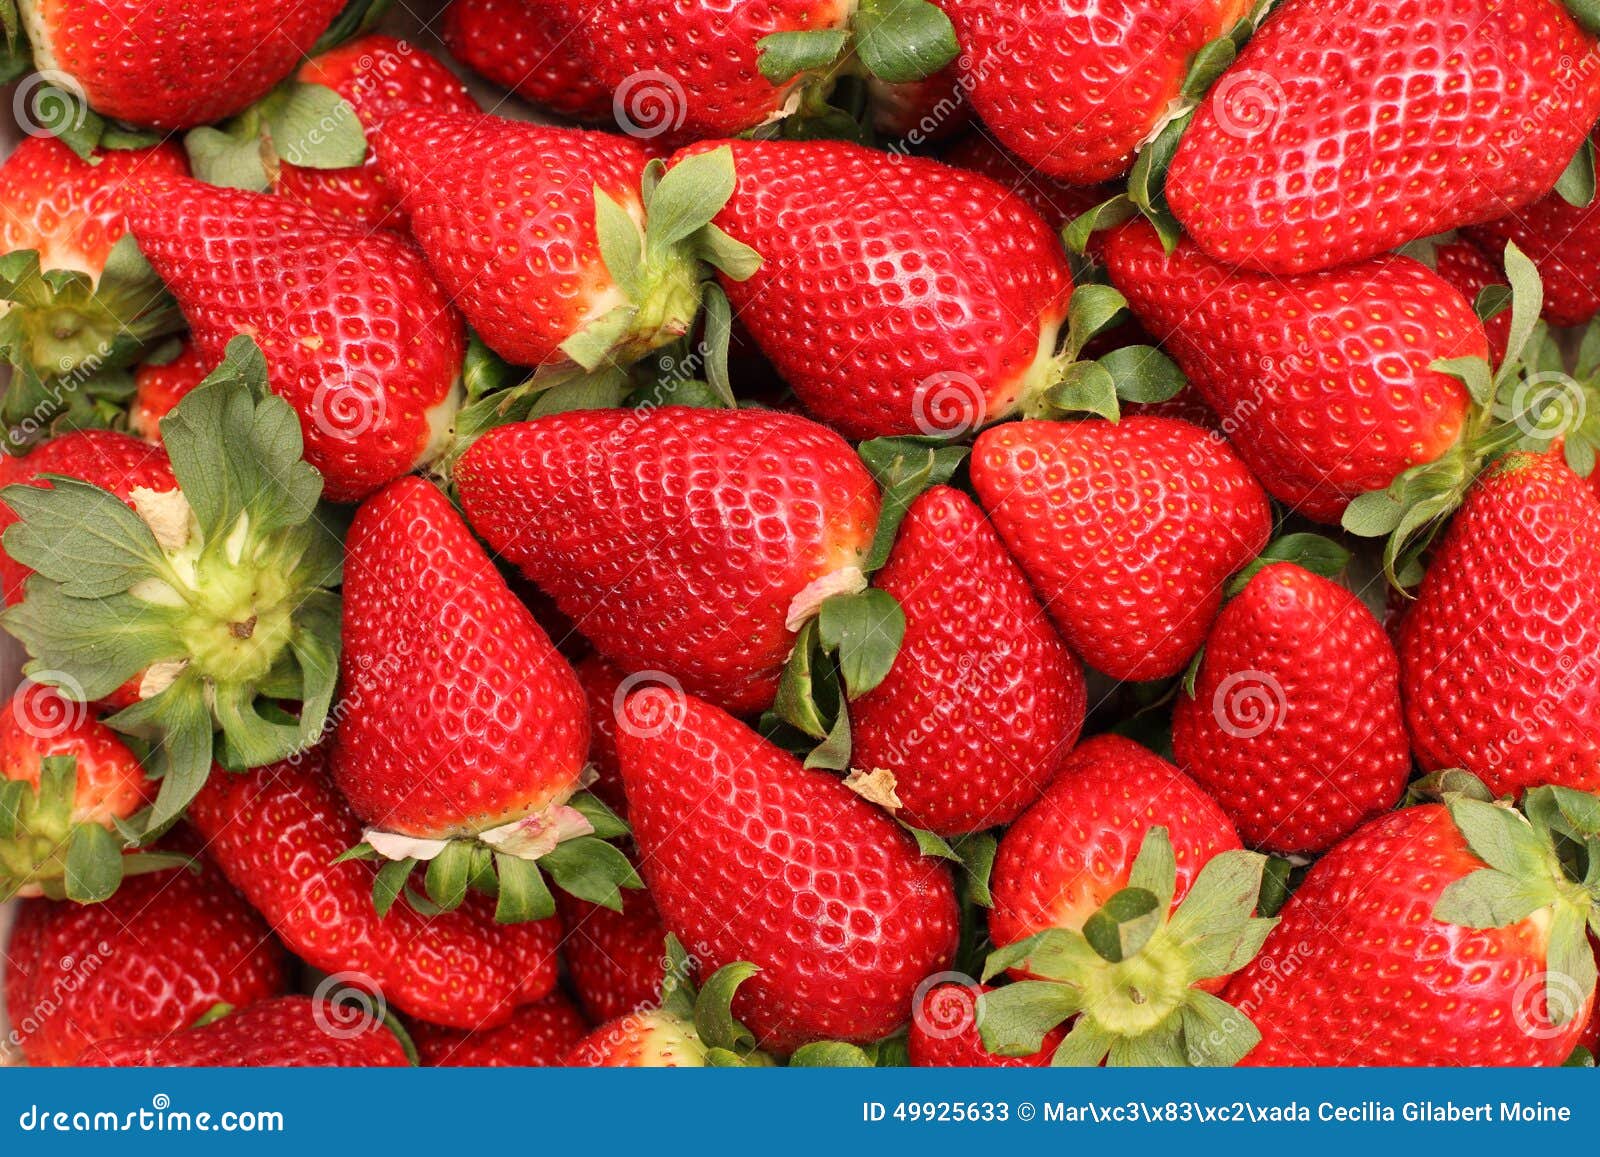 gigant strawberries